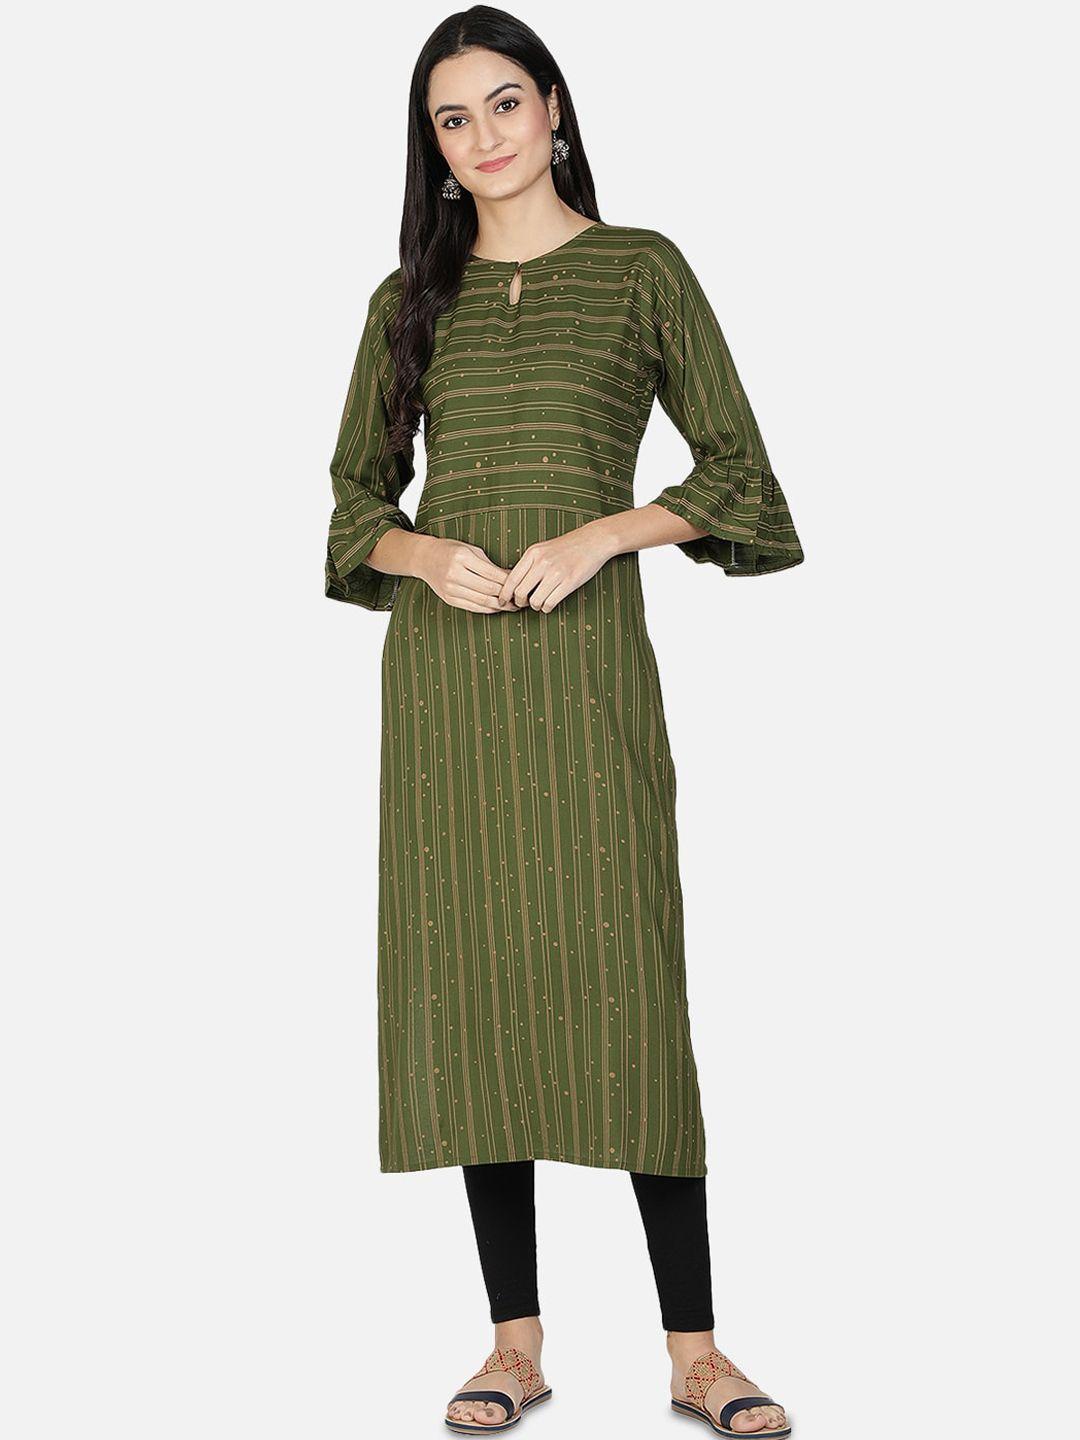 fabclub women olive green striped keyhole neck bell sleeves kurta